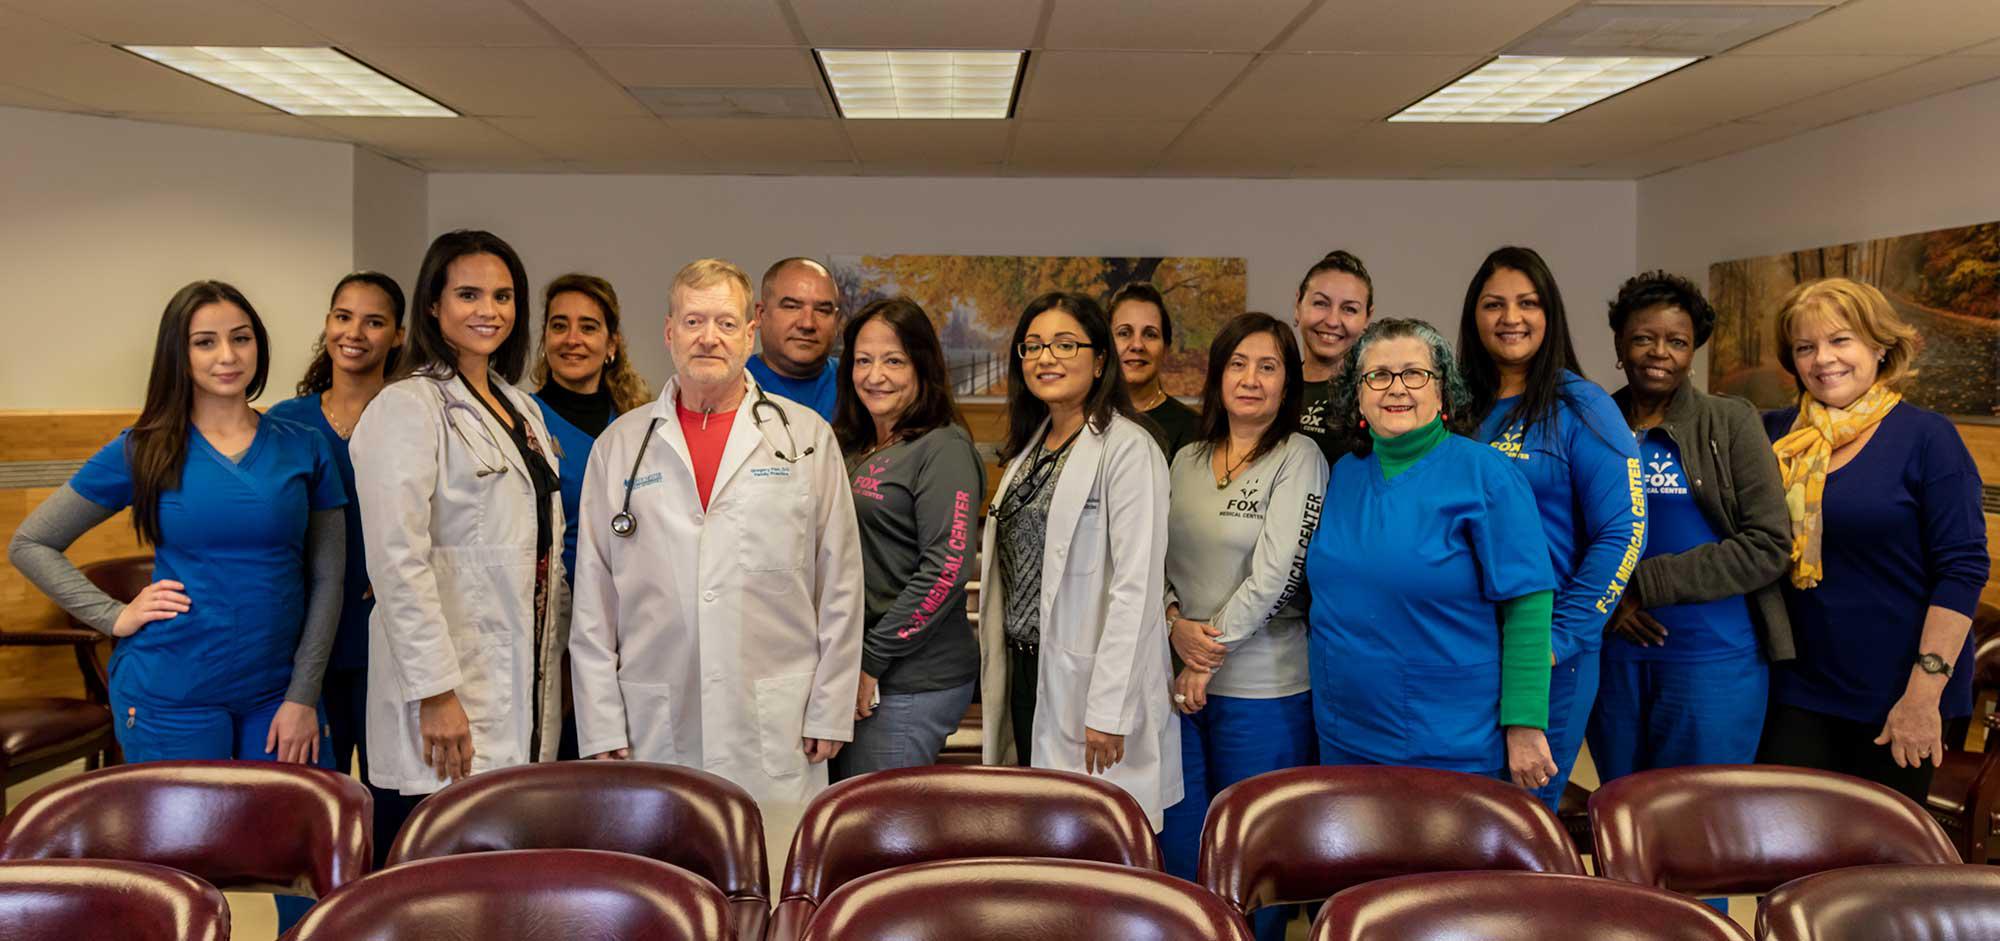 Dr. Gregory Fox, DO - Westchester Health Center Photo